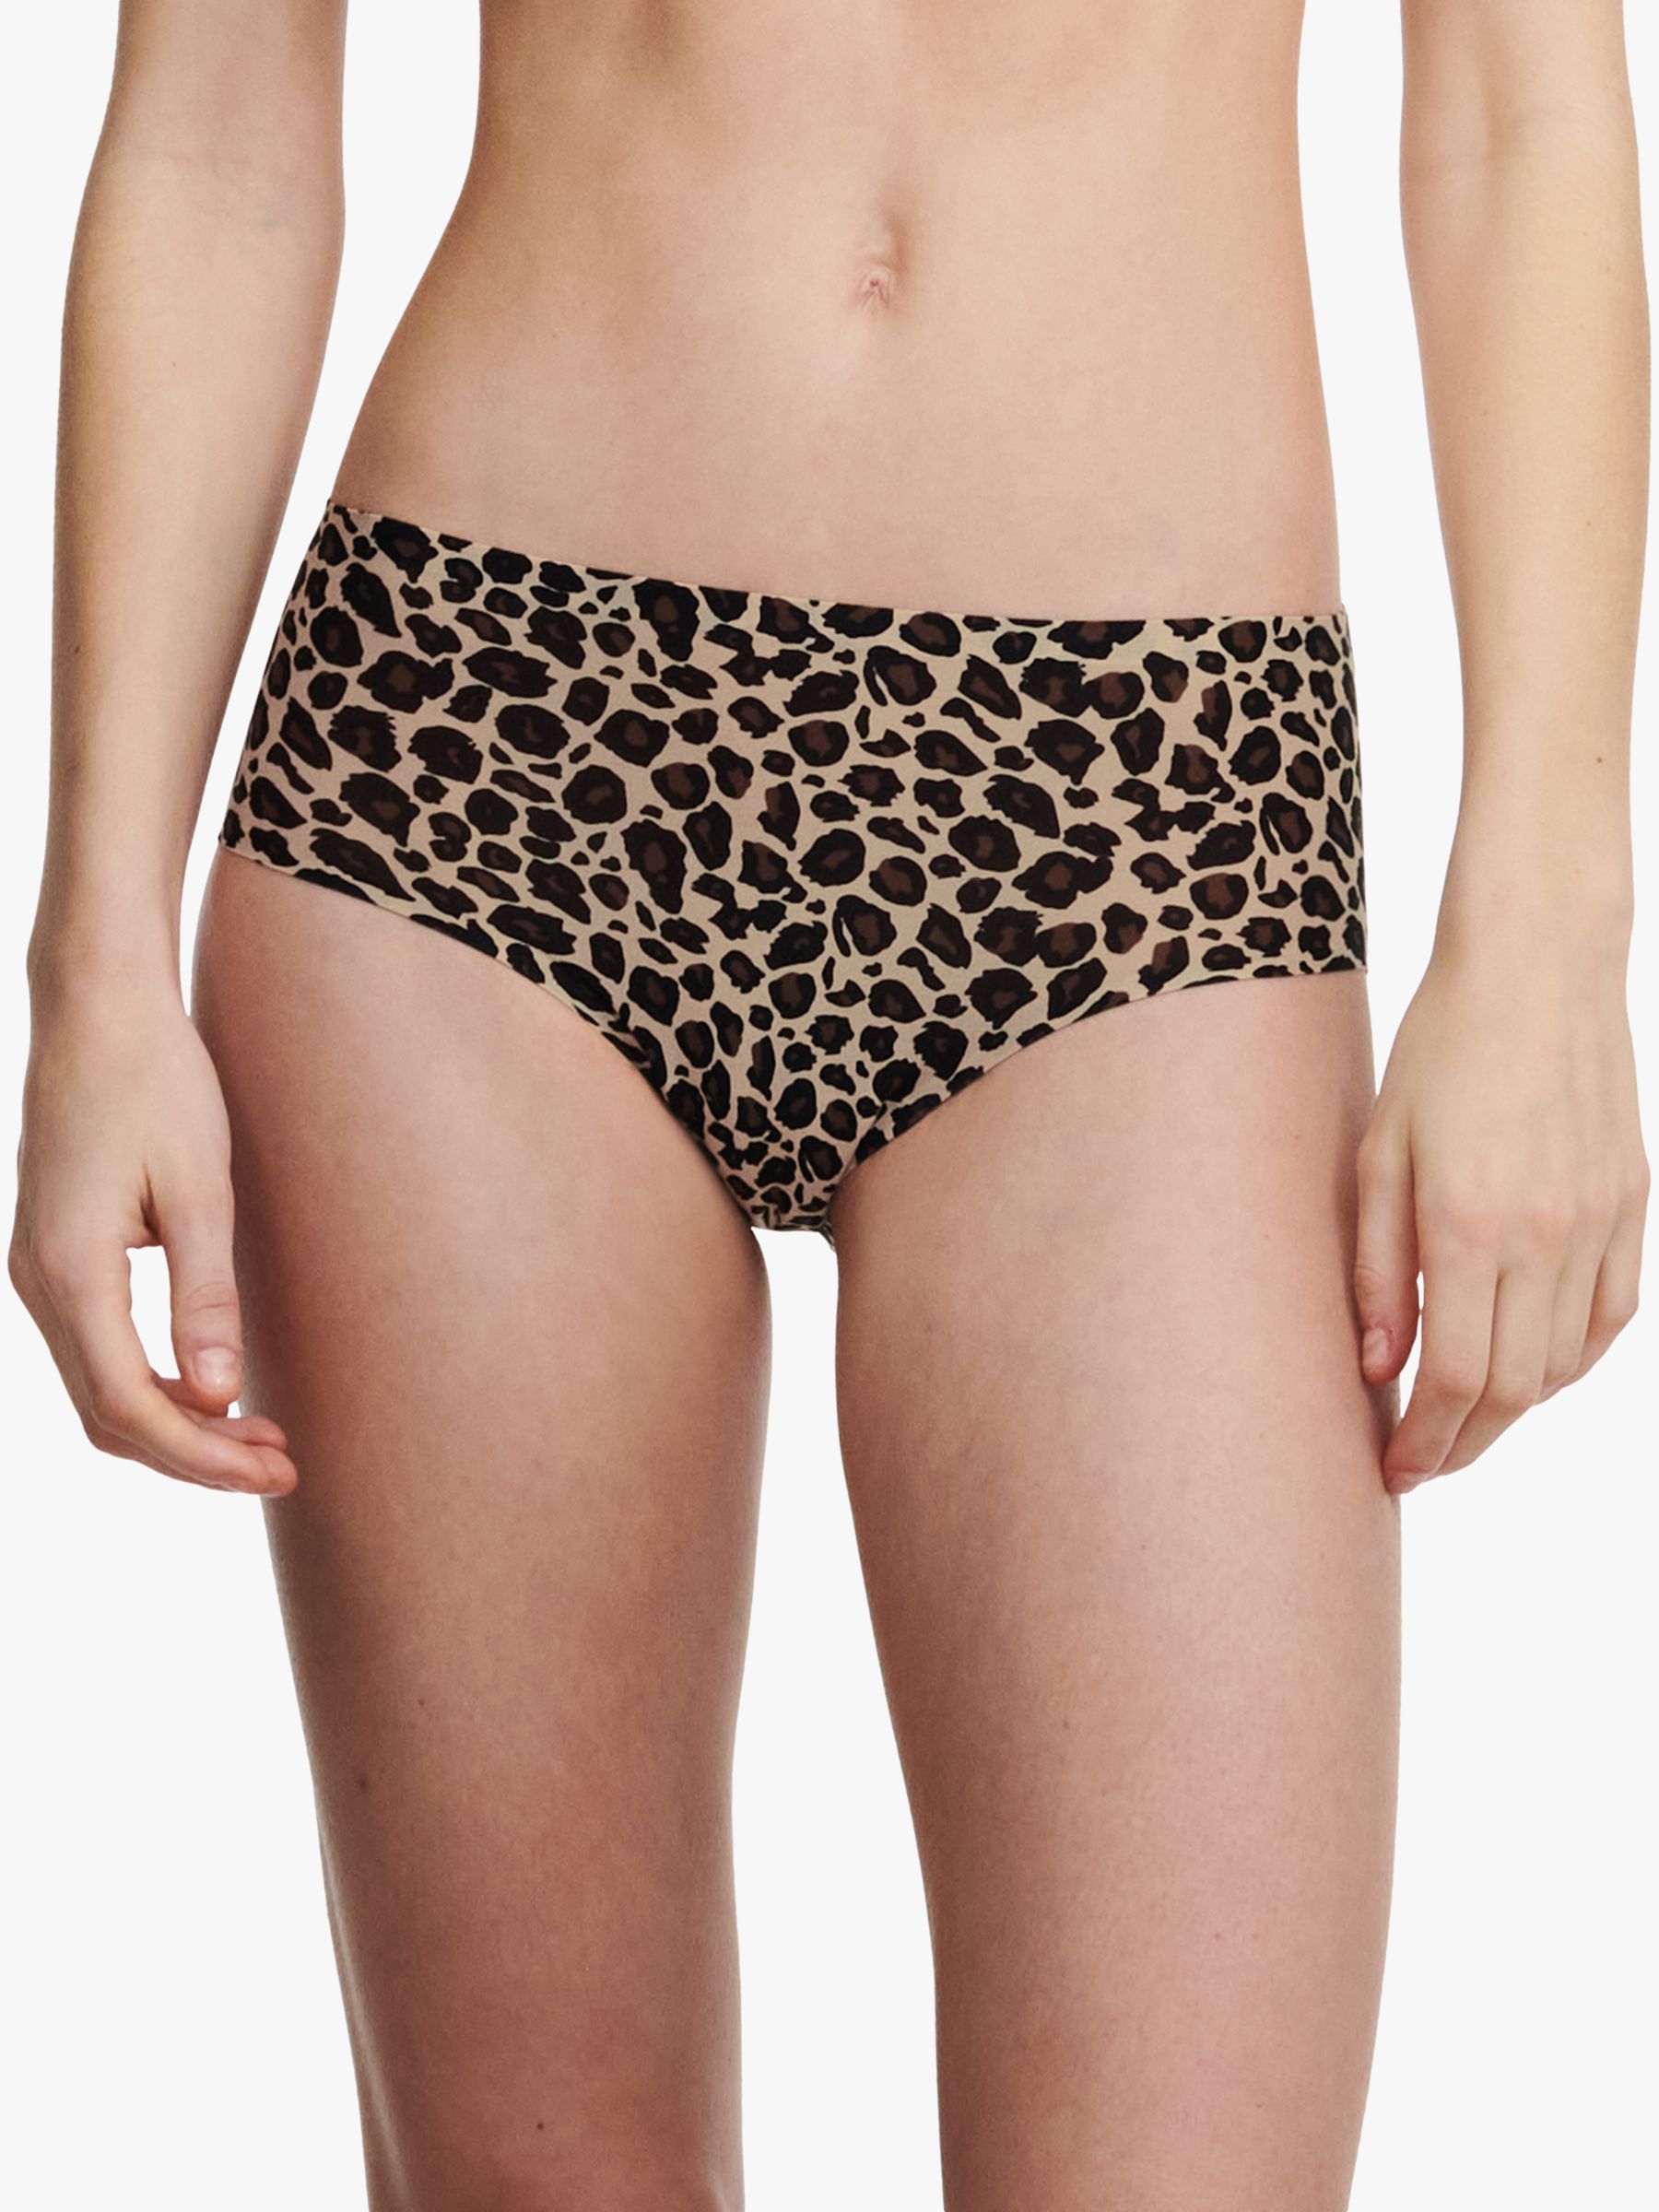 Women's Casual Soft Leggings – Leopard Print Stretchy Comfy Peach